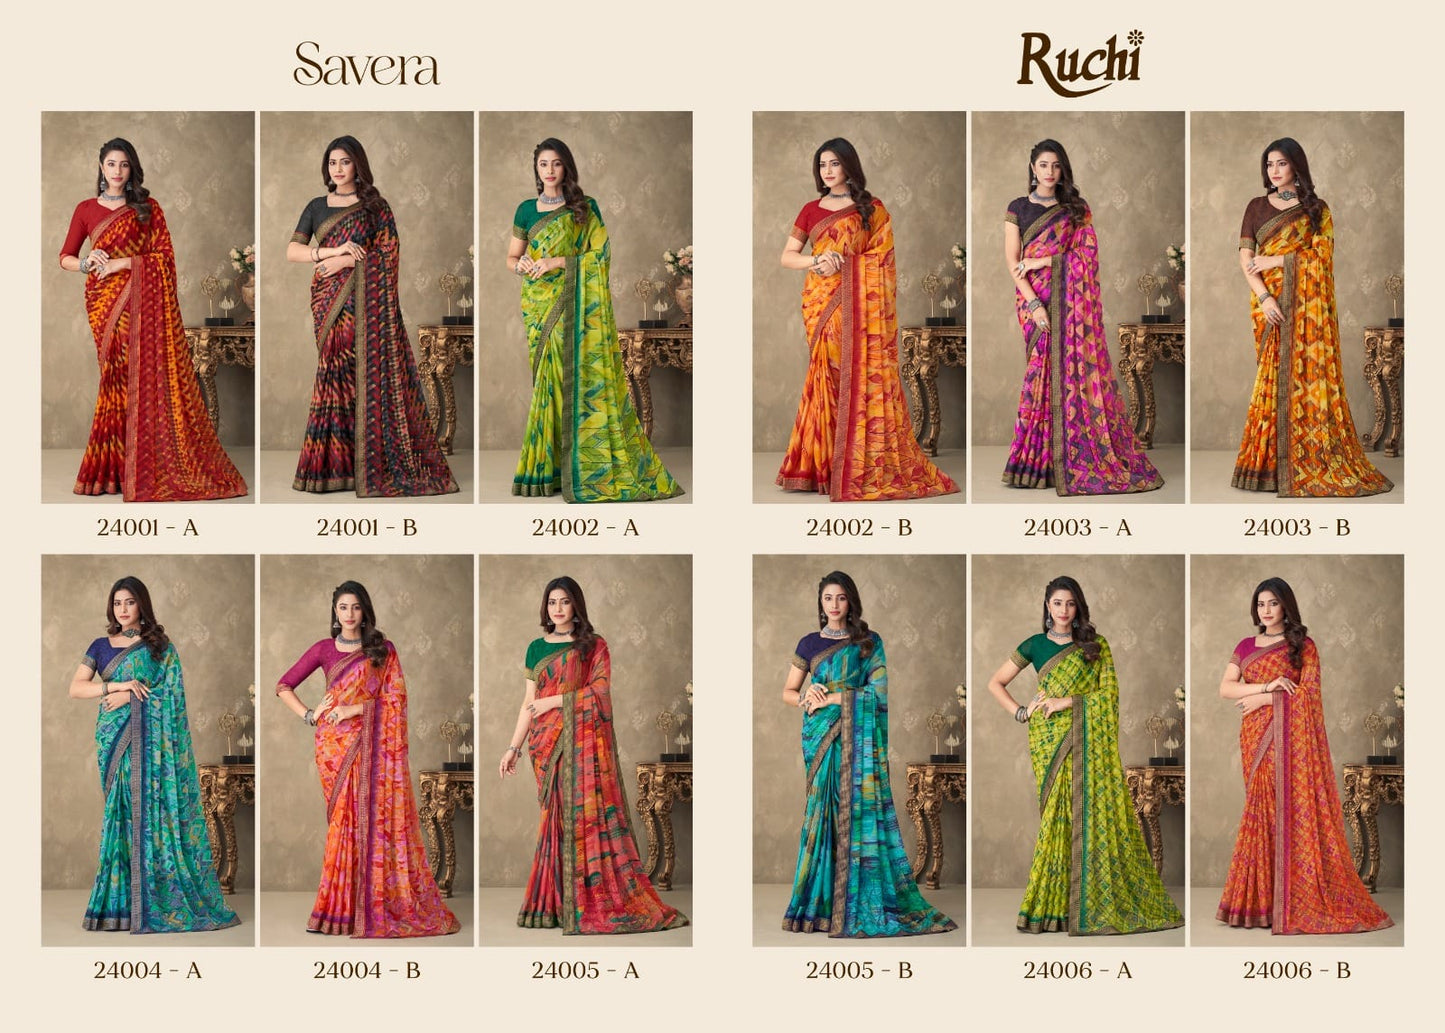 Savera-7 Edition Ruchi Chiffon Sarees